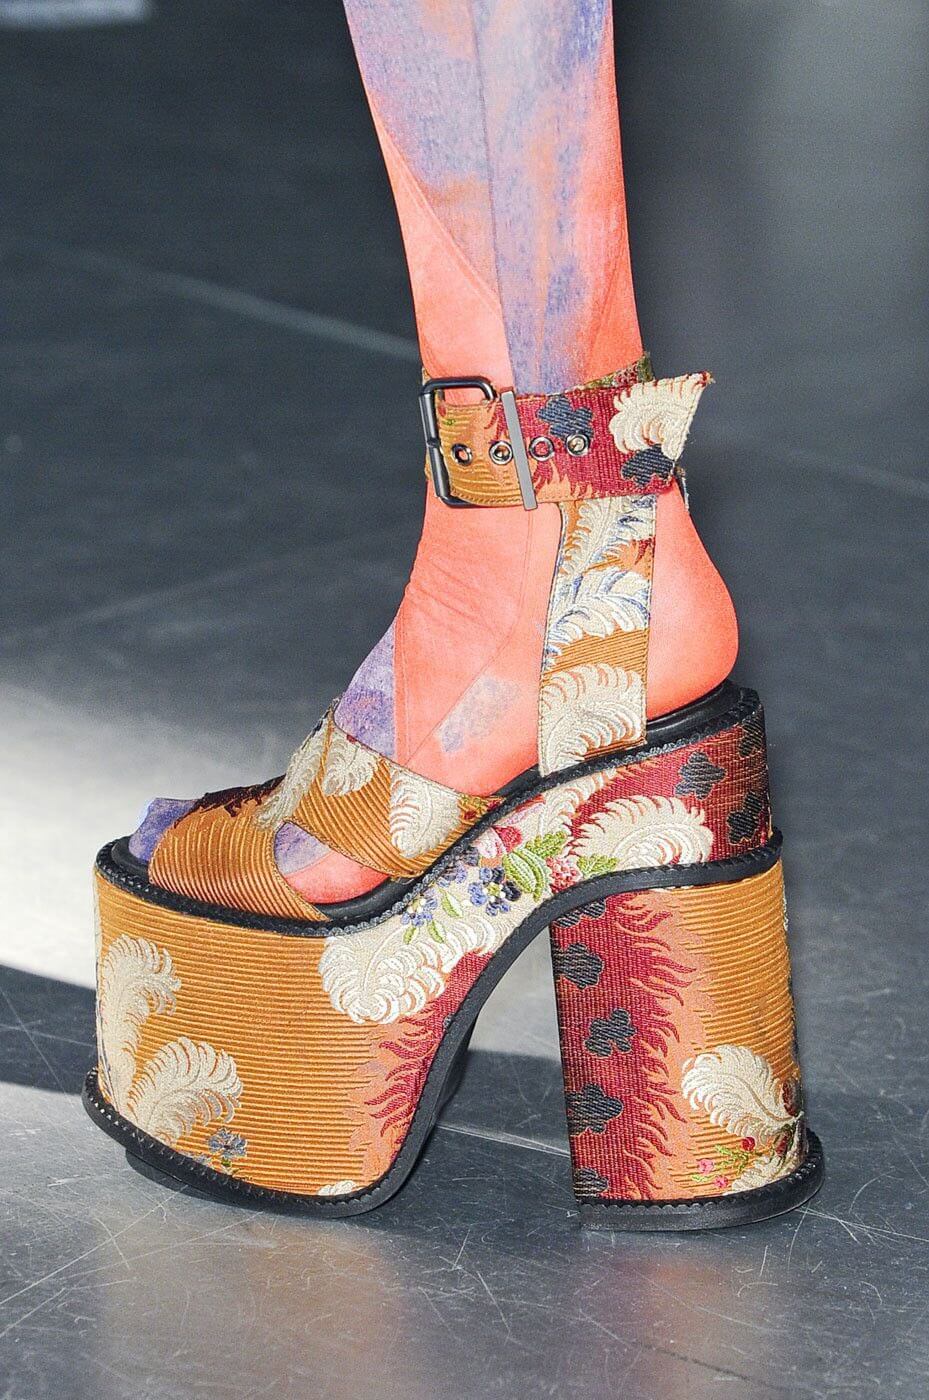 Platform Shoes in Modern Fashion